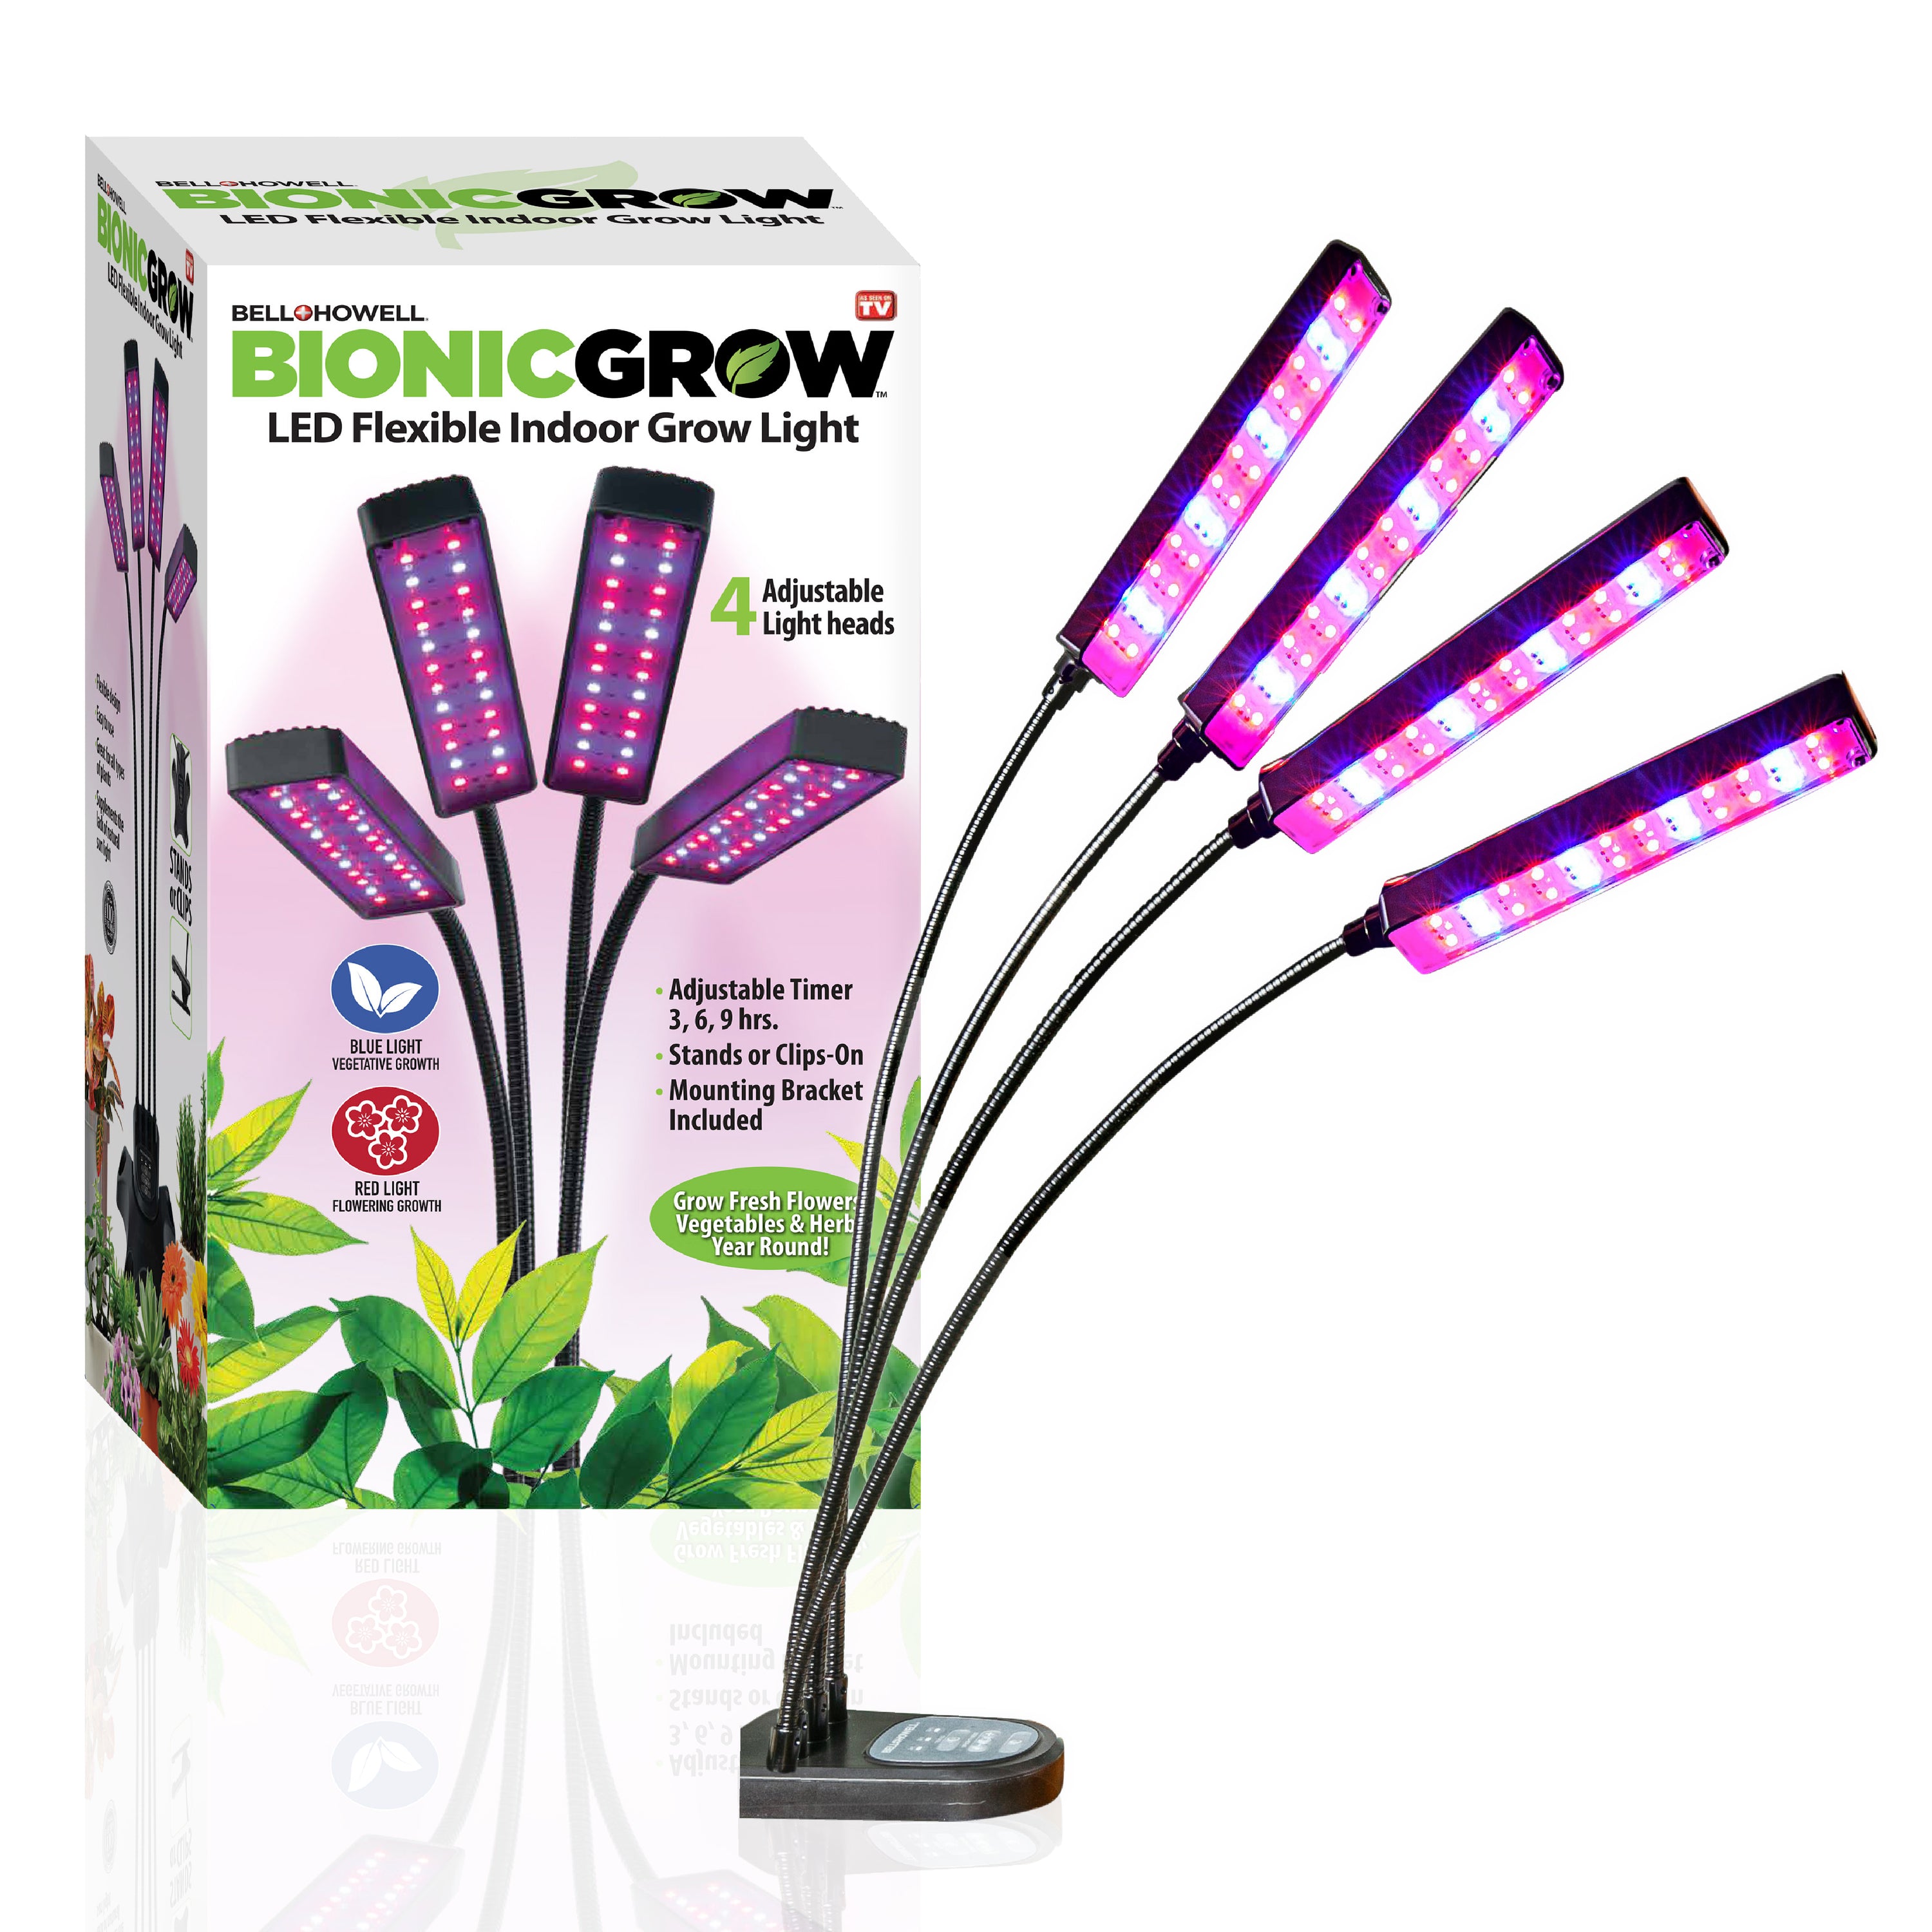 Bionic Grow Light - Flexible LED Indoor Grow Light (4 heads)